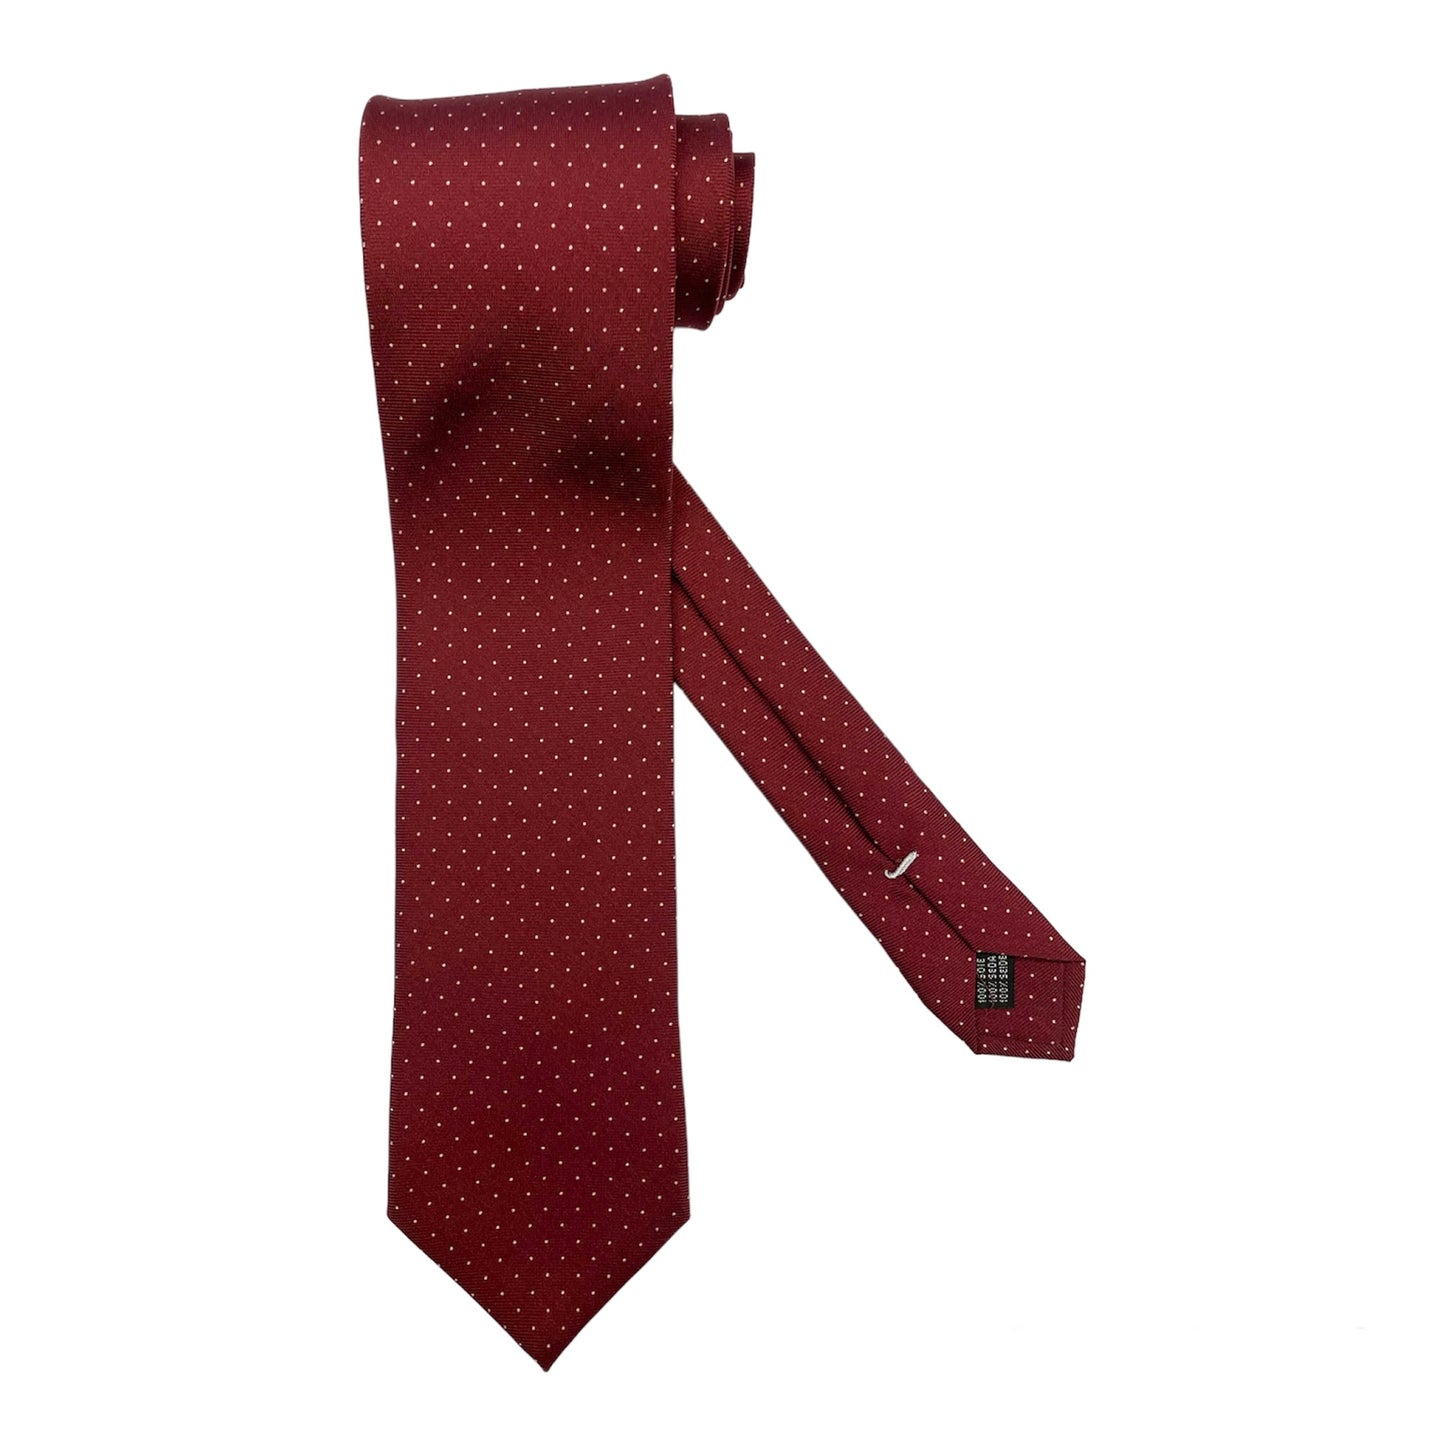 Cravatta seta bordeaux punto a spillo a bianco